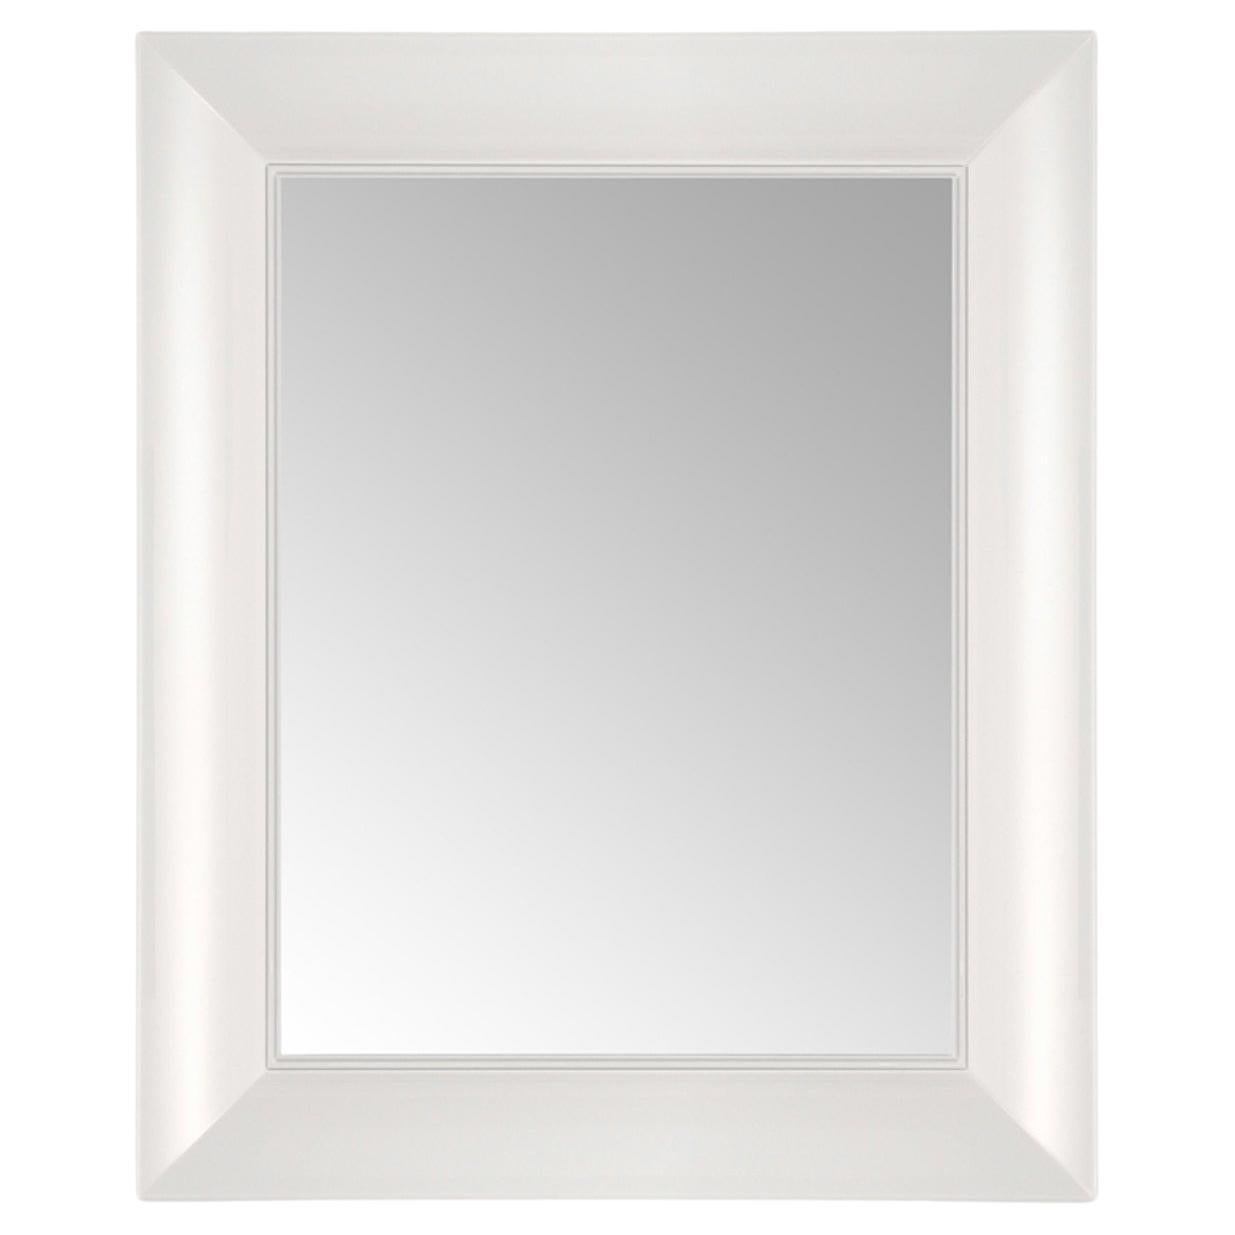 Petit miroir rectangulaire « Francois Ghost » Kartell en blanc de Philippe Starck